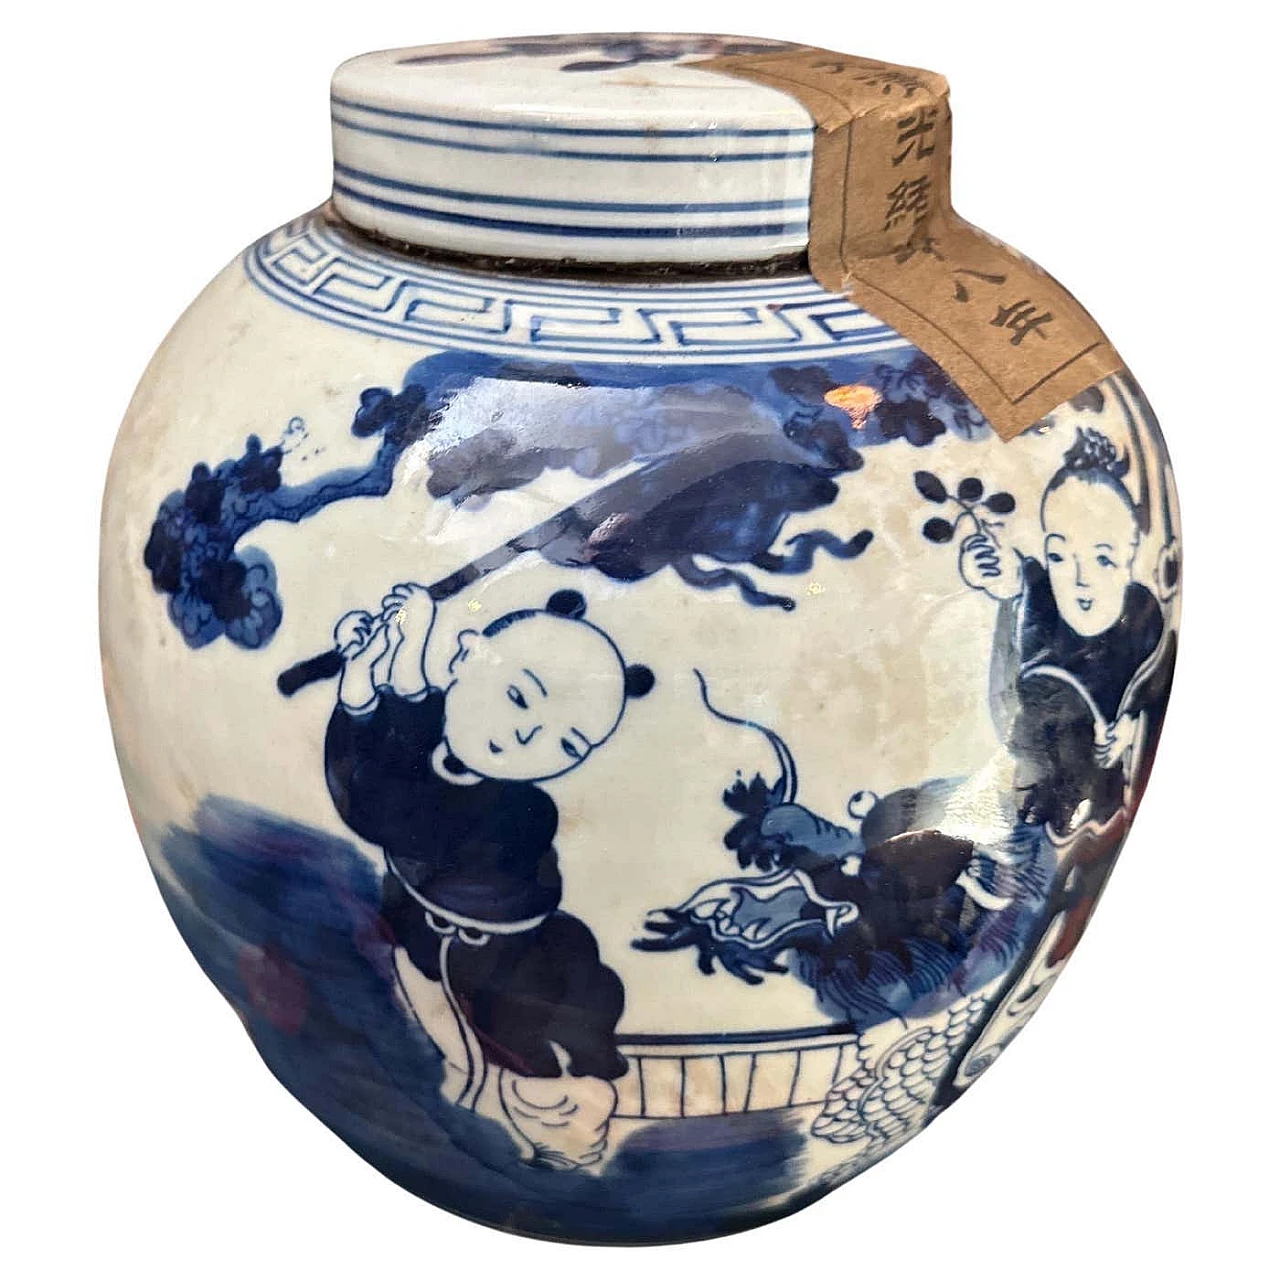 Barattolo da zenzero cinese in ceramica bianca e blu, anni '70 1